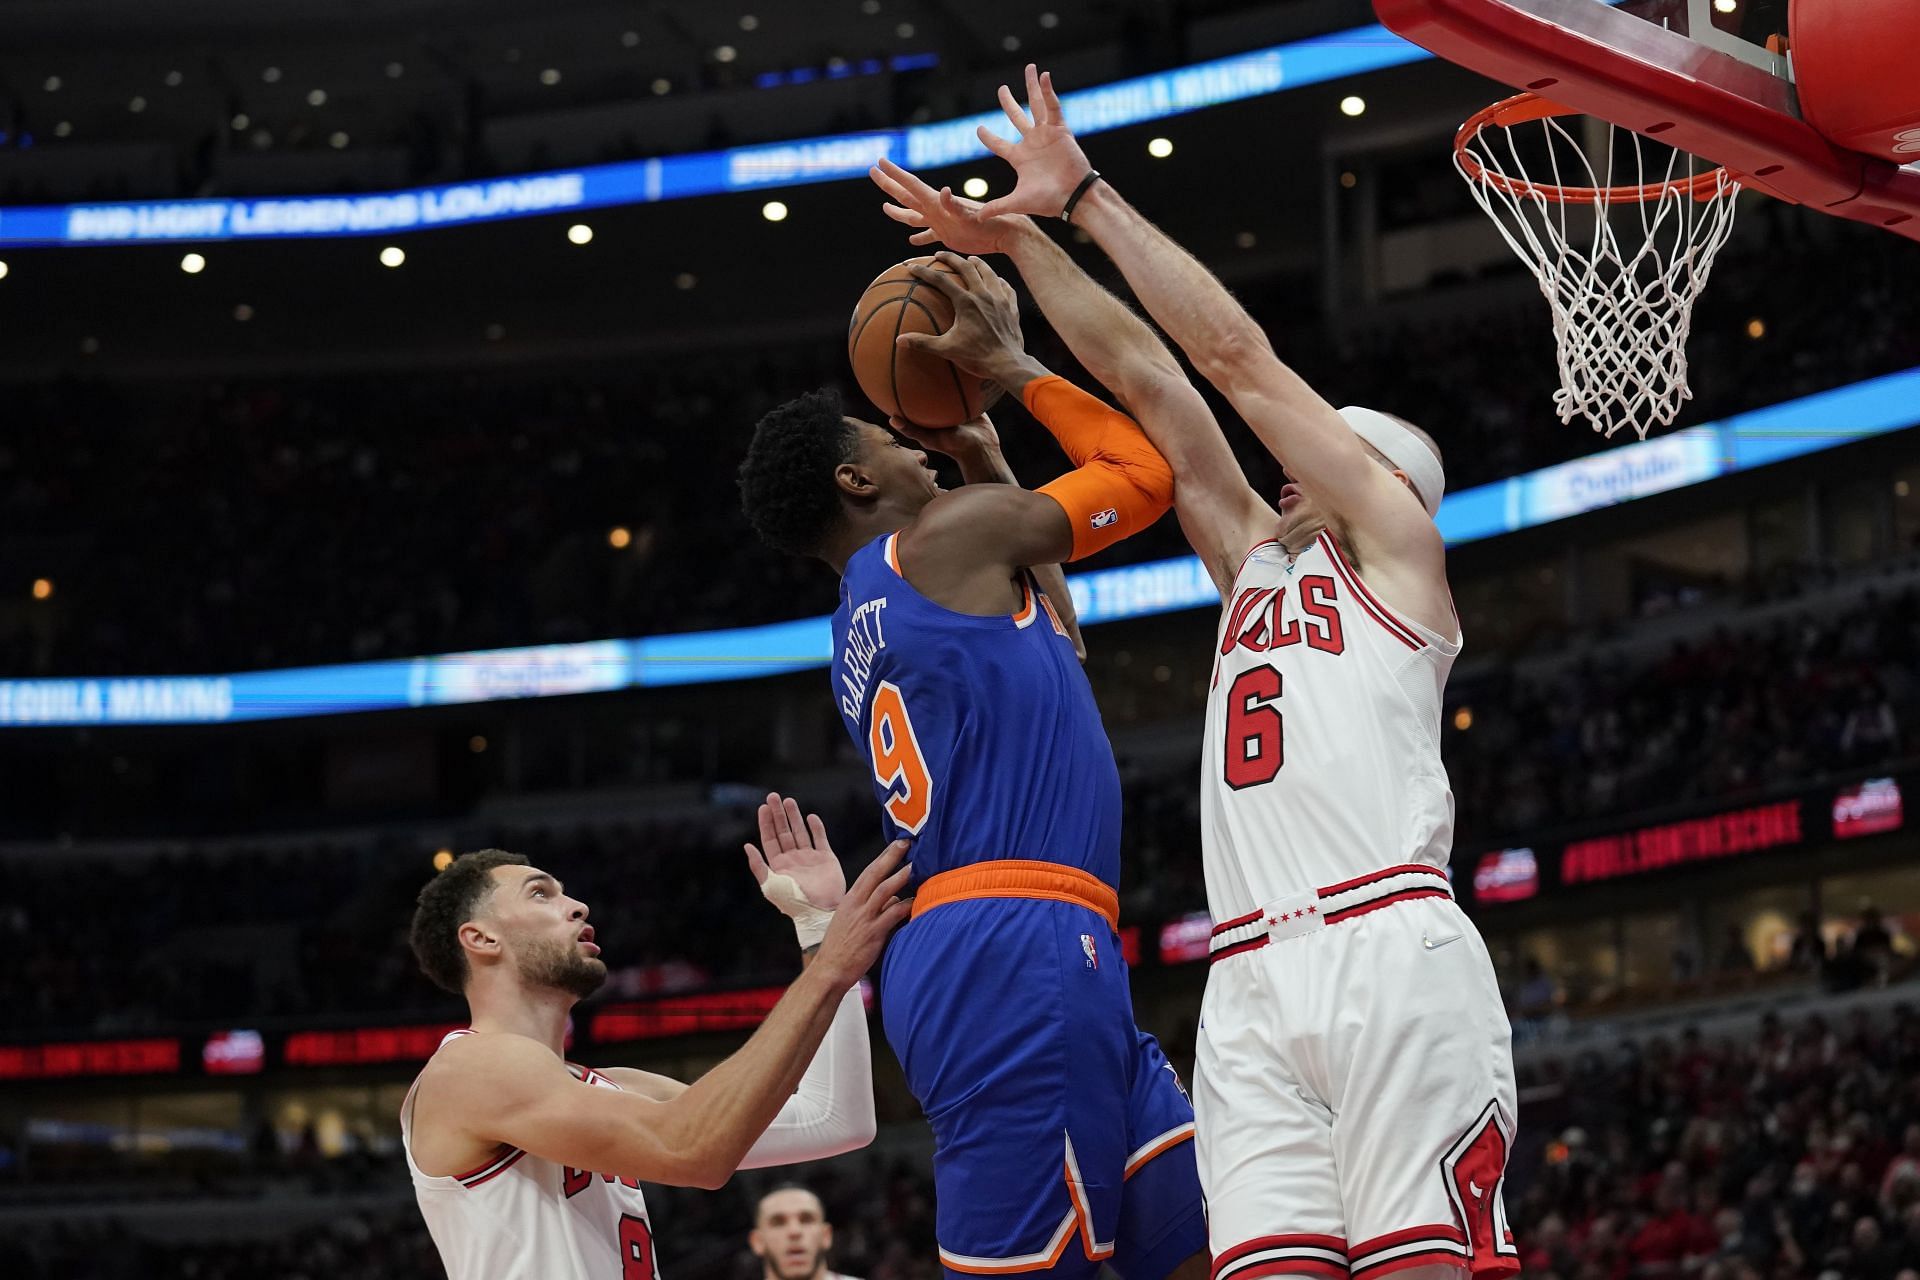 The New York Knicks will host the Chicago Bulls on December 3rd